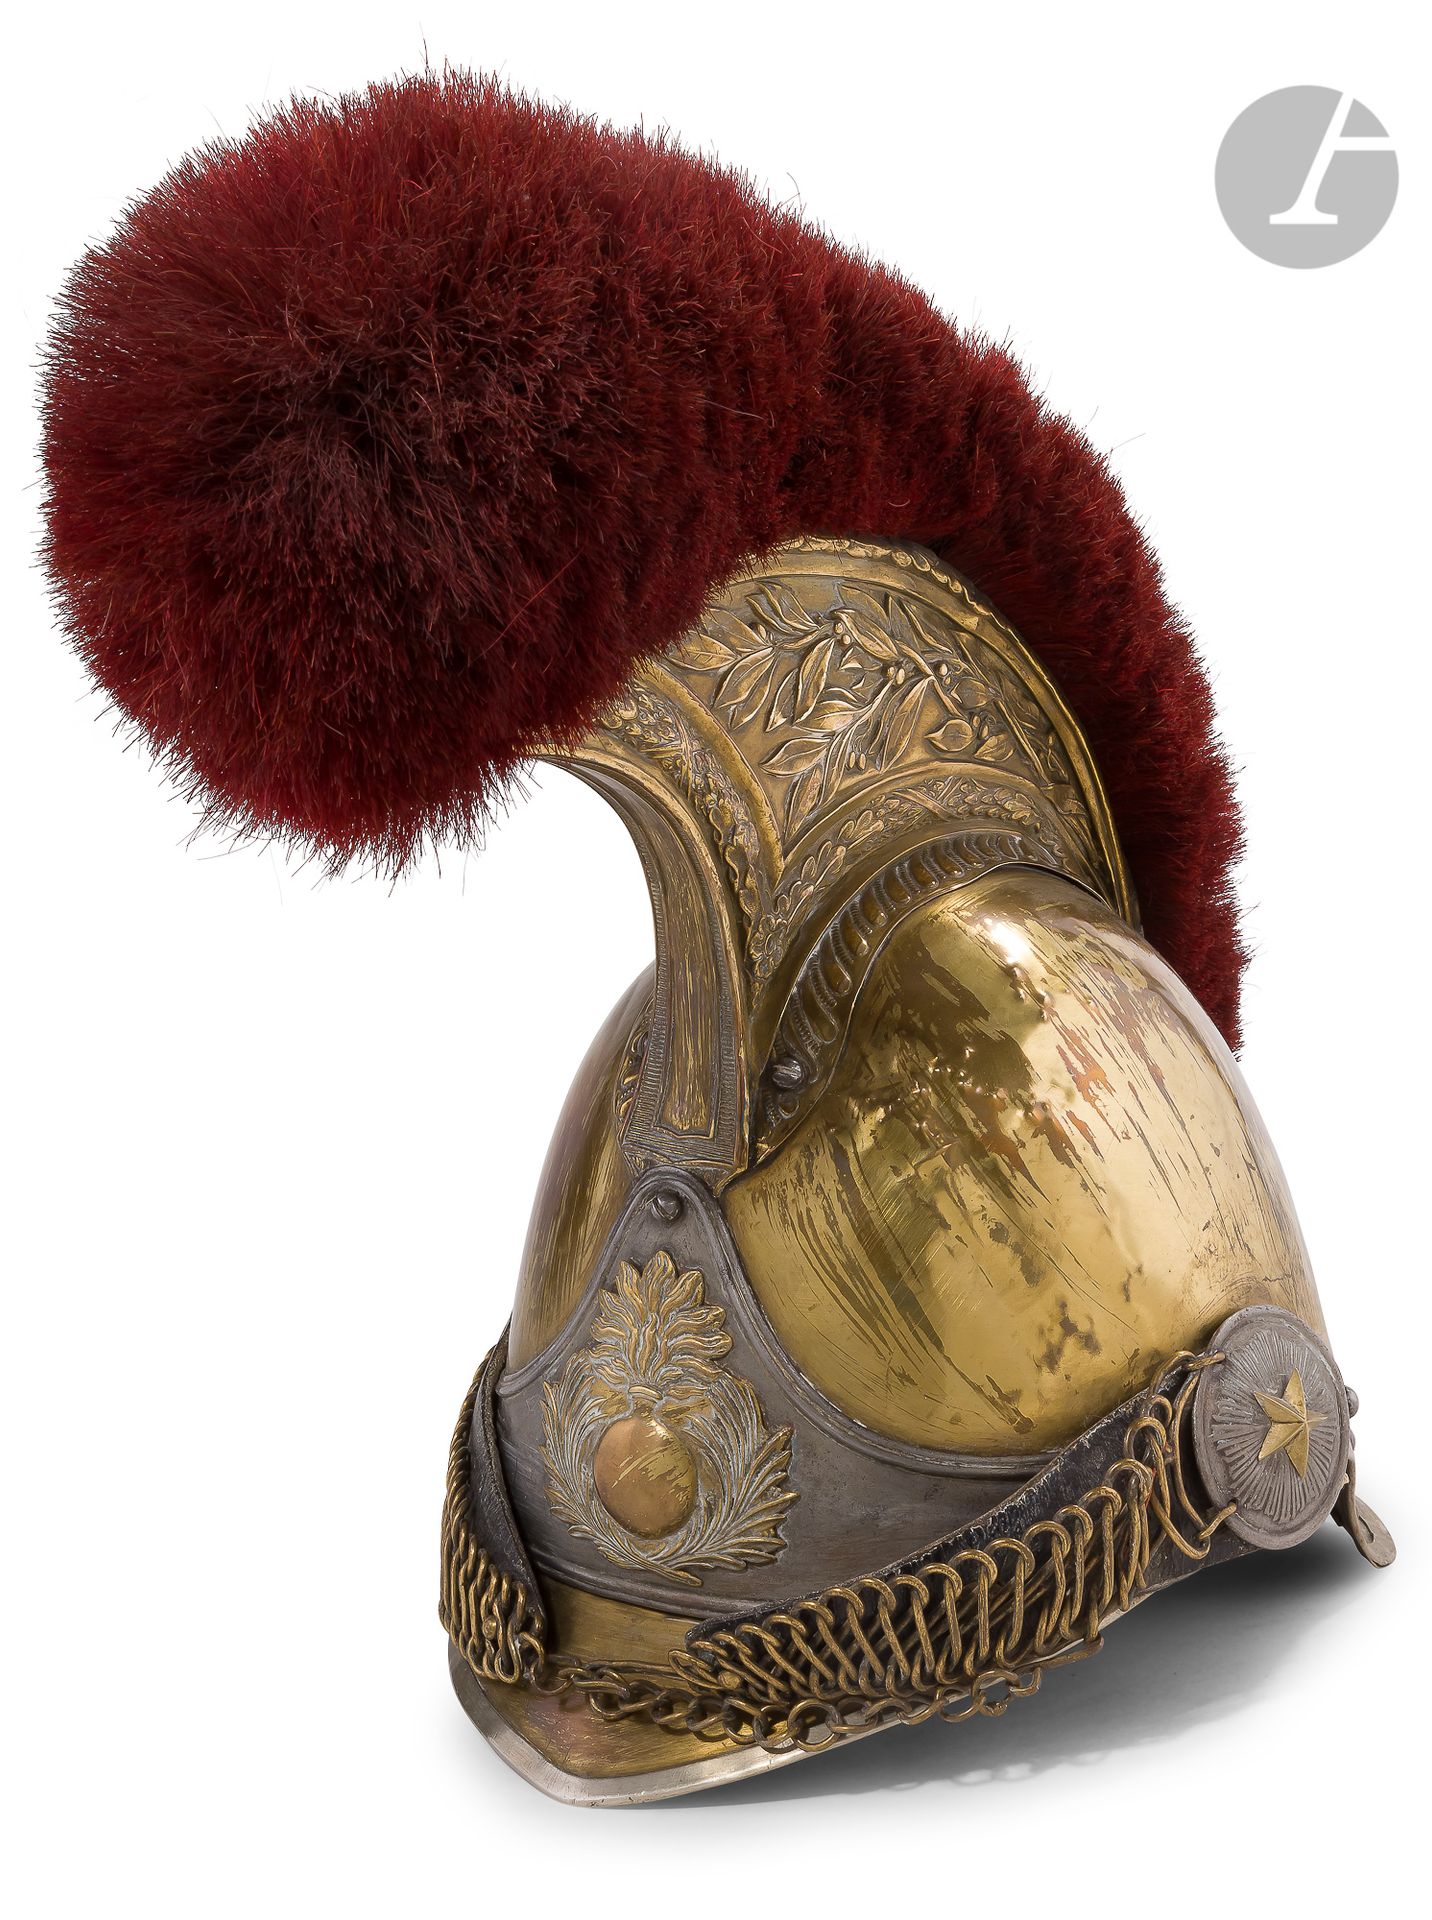 Null Carabiniere helmet and cuirass set.
- Rifleman's helmet. Crest bomb. Chinst&hellip;